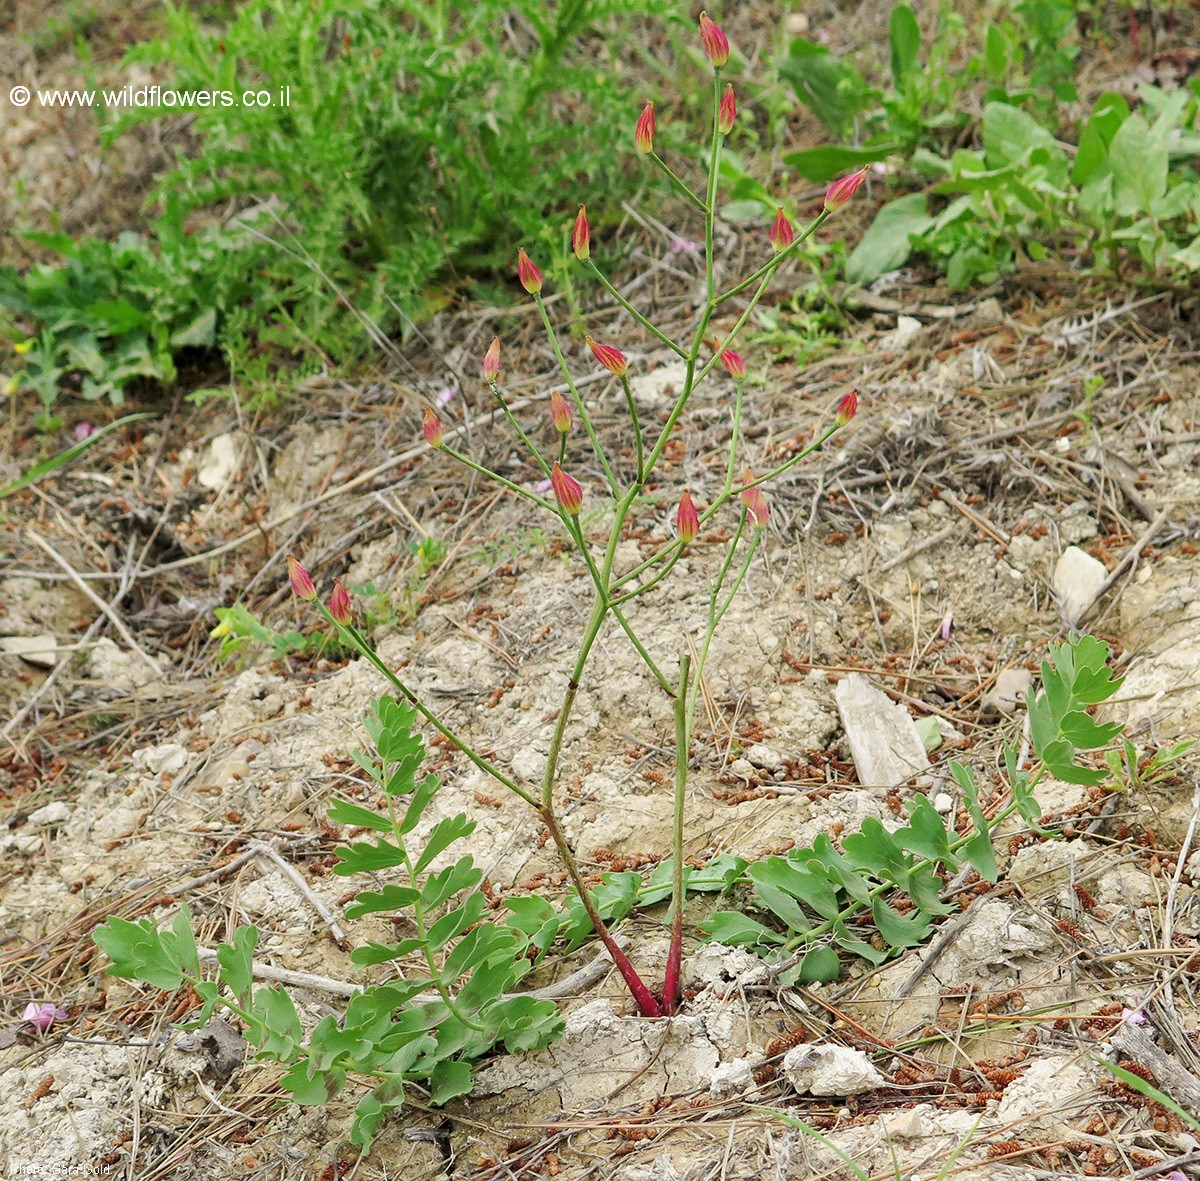 Bongardia chrysogonum